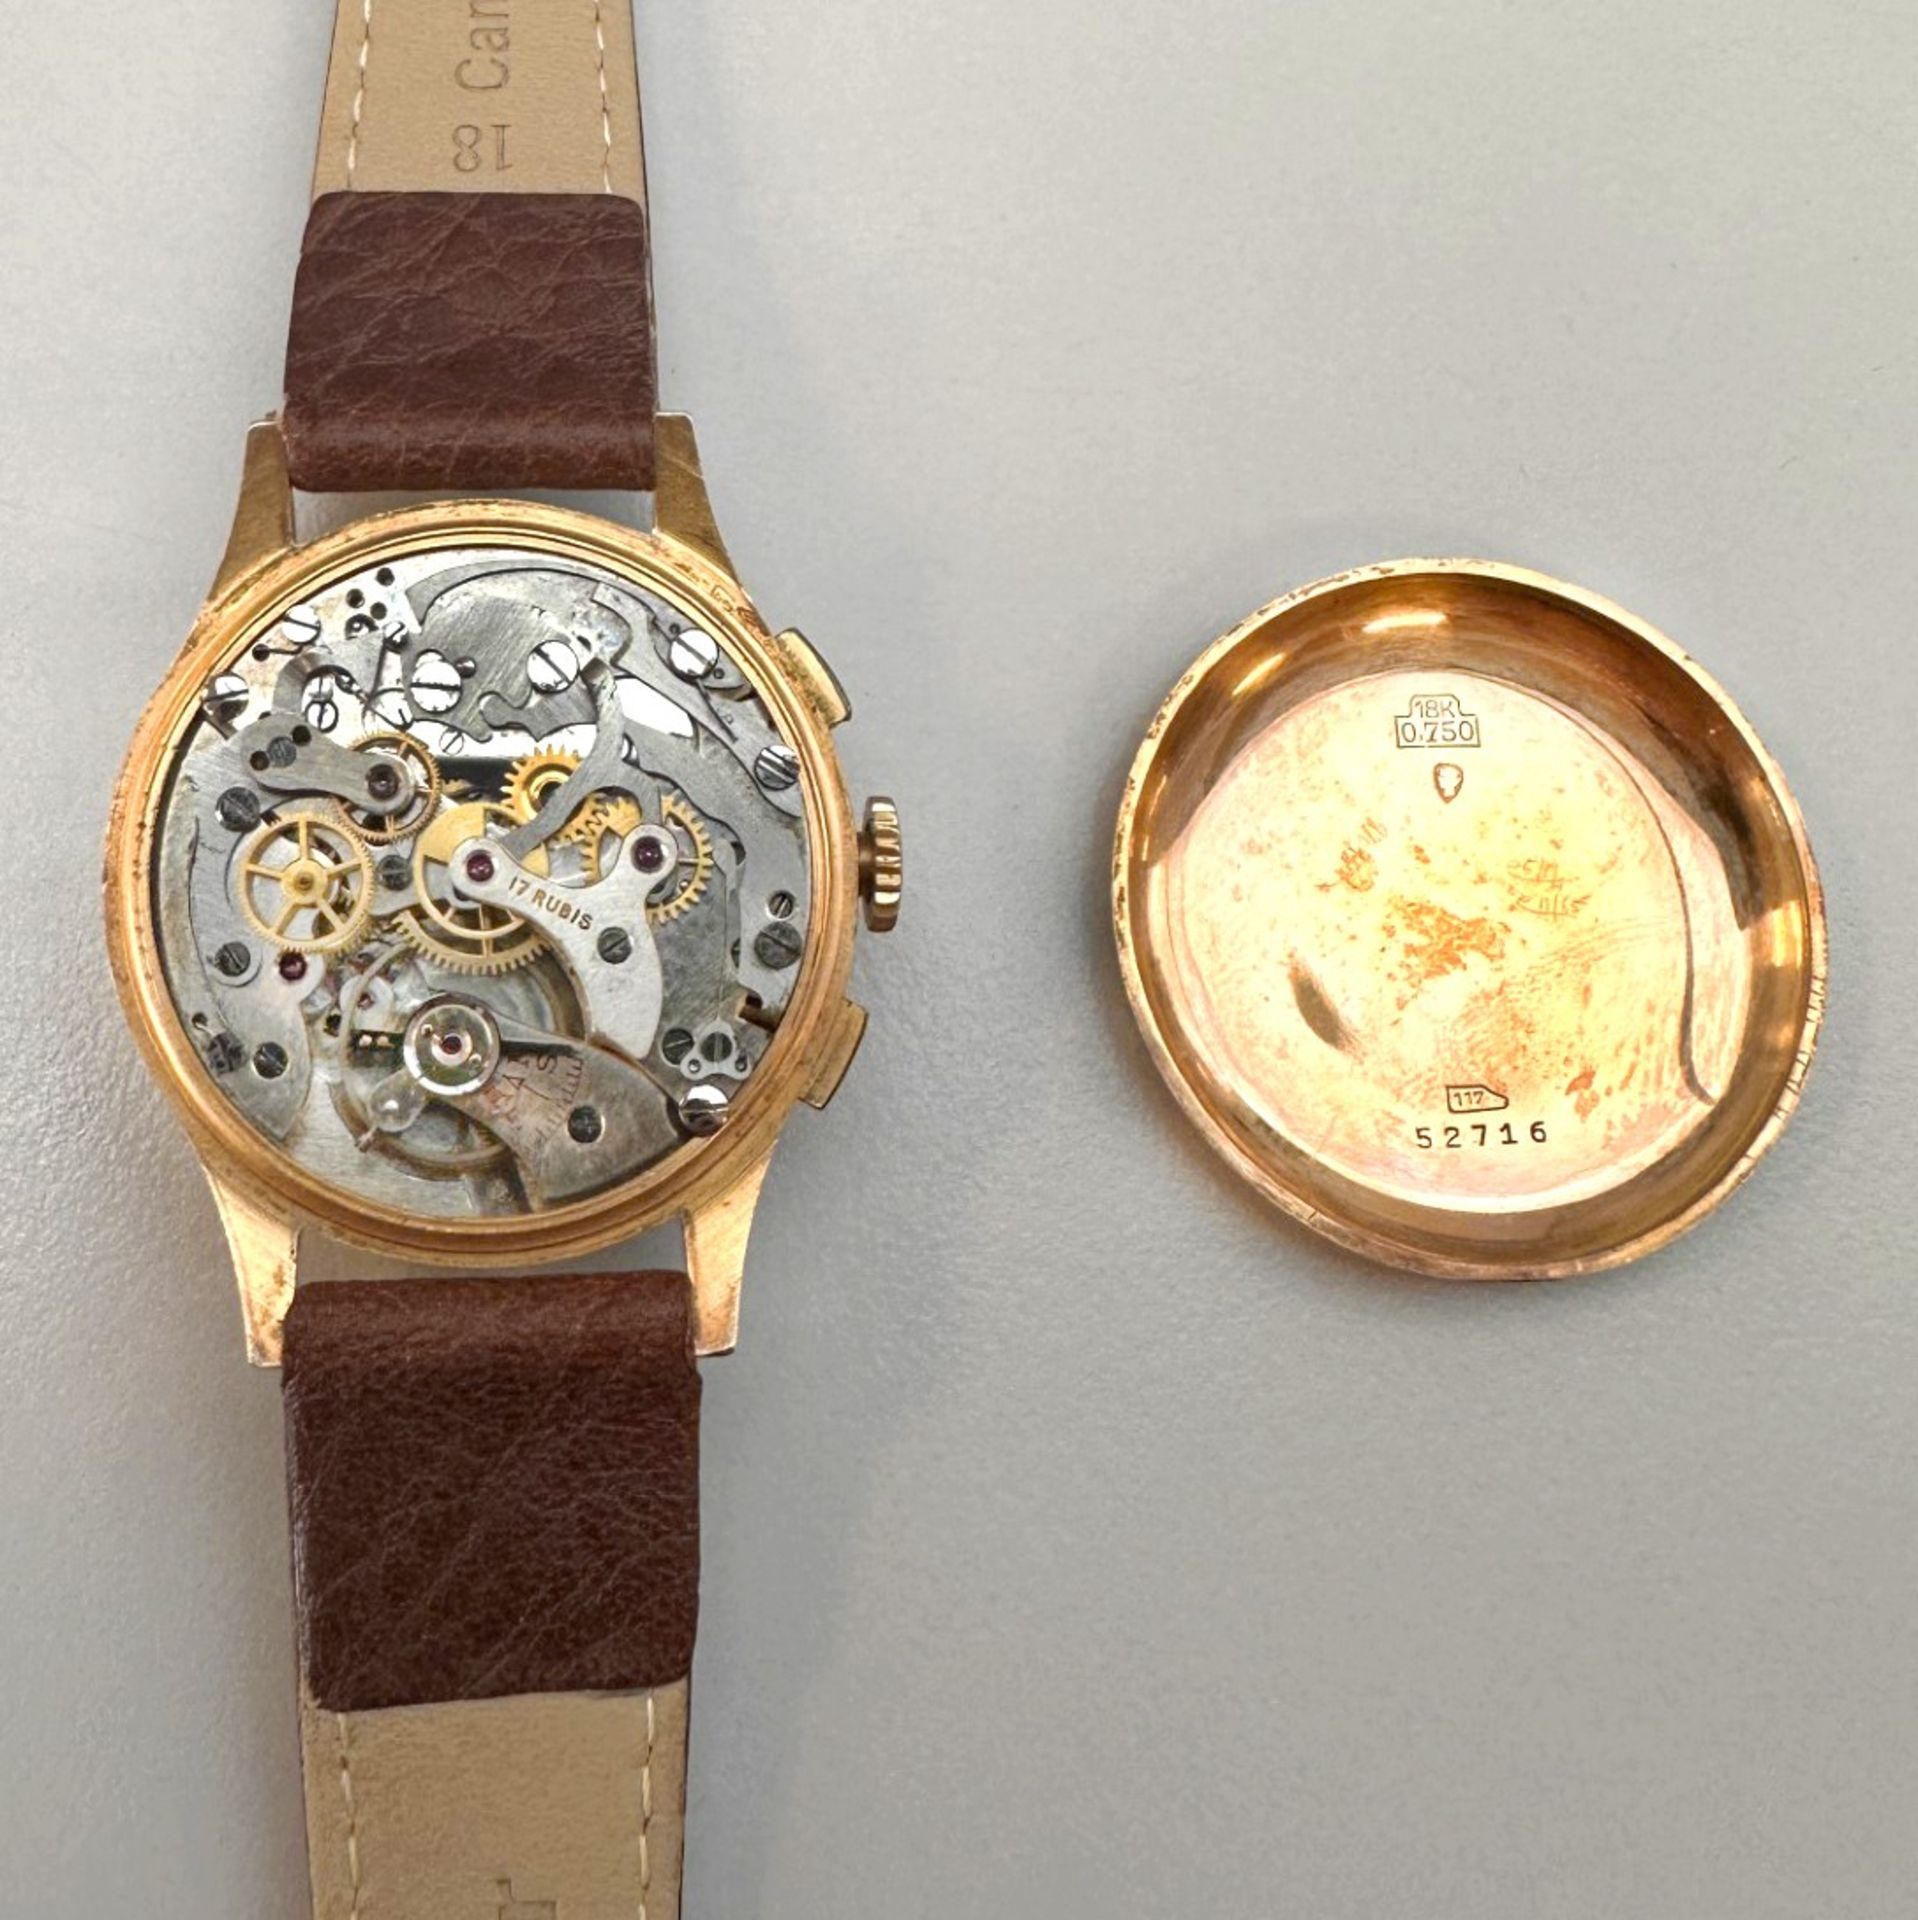 No Reserve - Baume & Mercier vintage 18K. chronograph - Men's watch. - Image 6 of 6